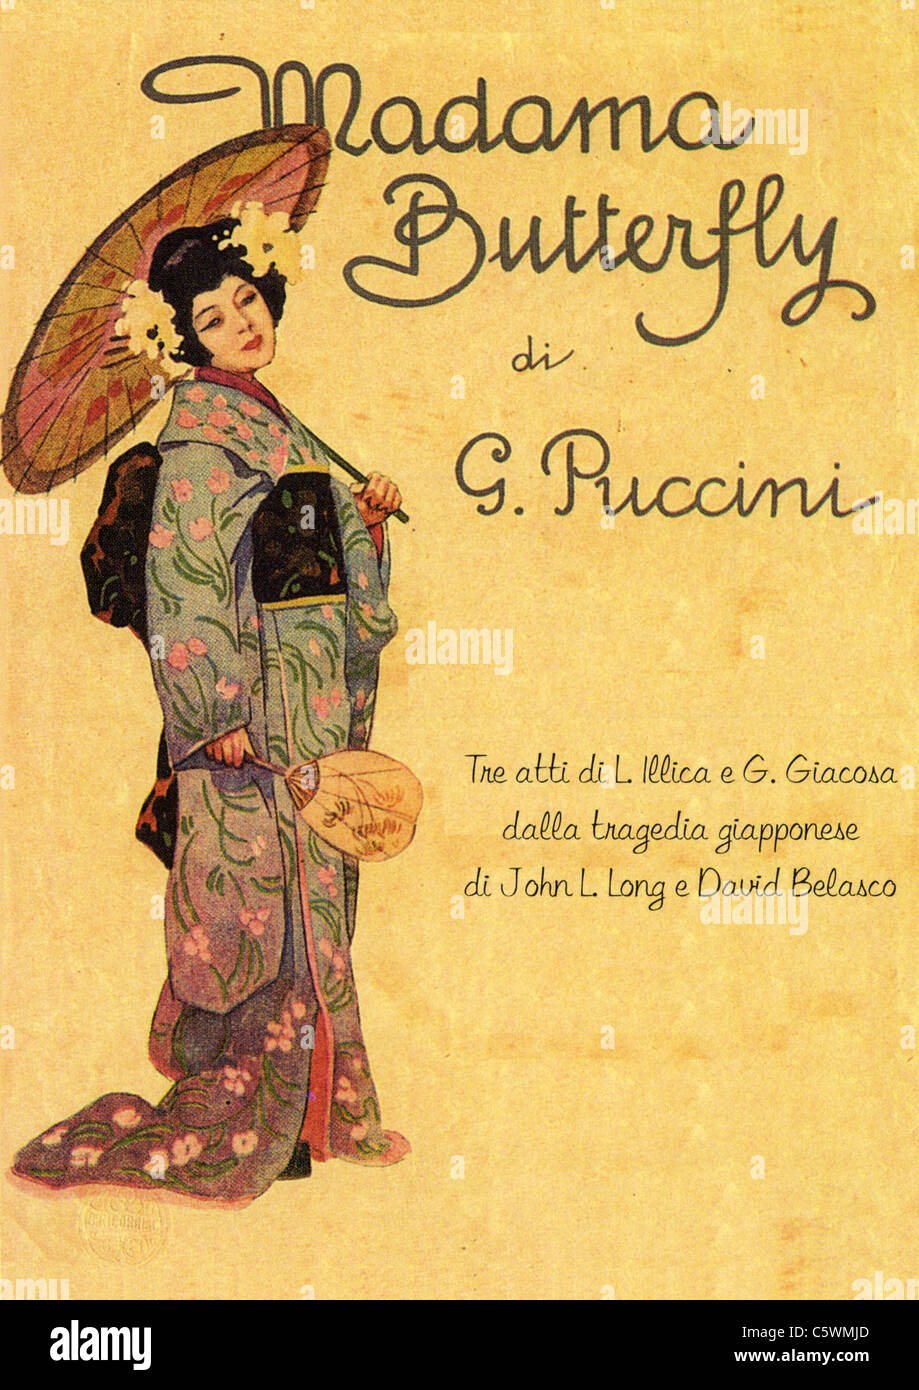 MADAME BUTTERFLY Cartel de la ópera de Puccini Foto de stock